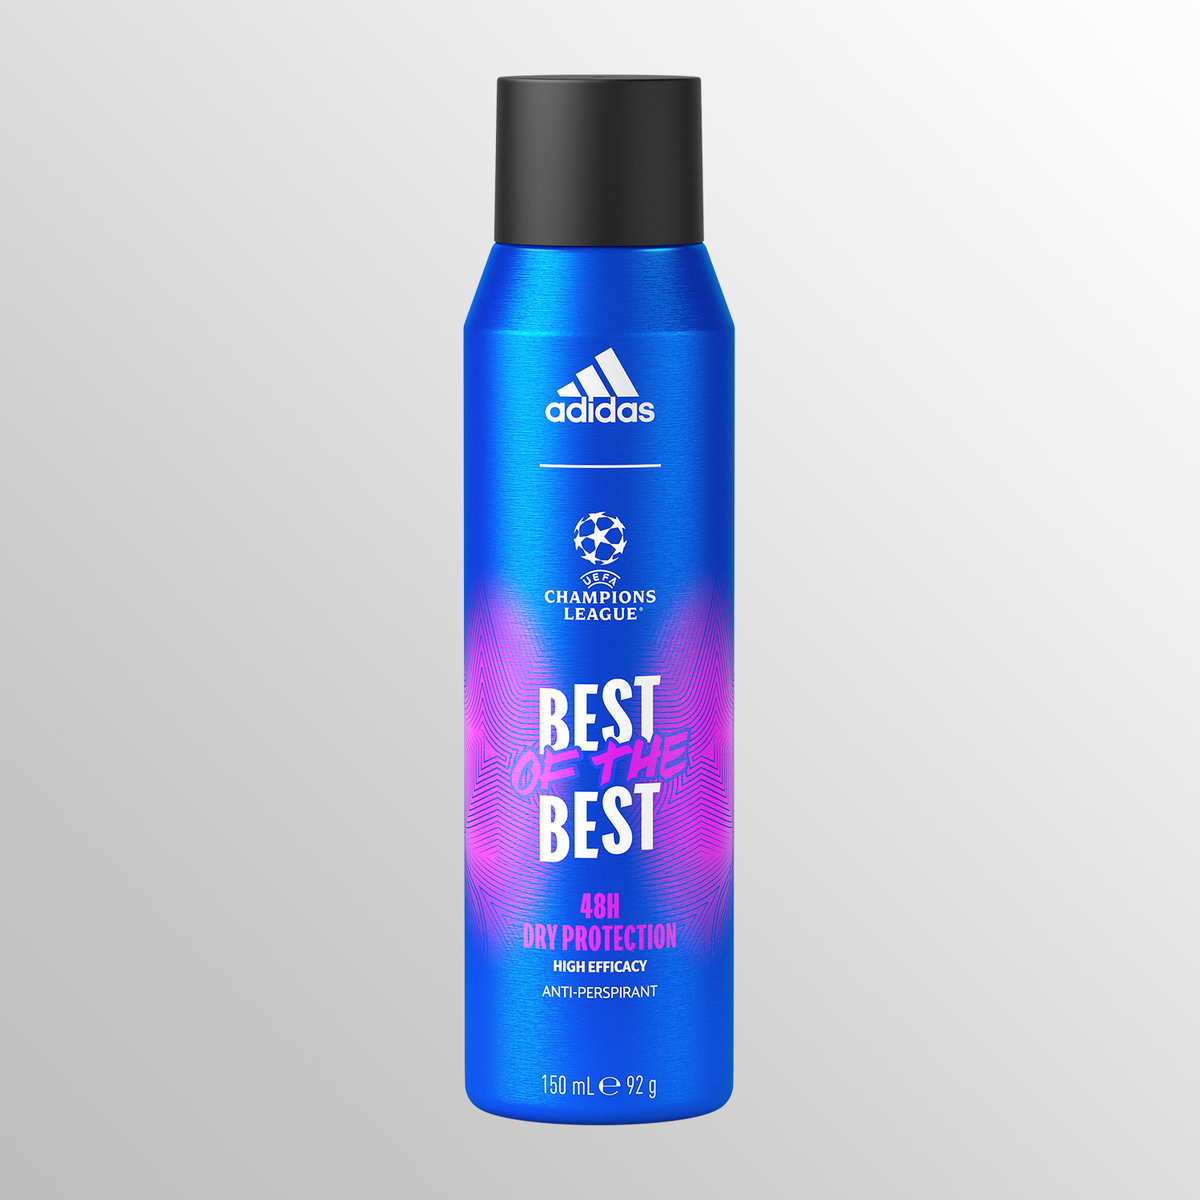 Adidas UEFA Best of the Best Anti-Perspirant 150ml